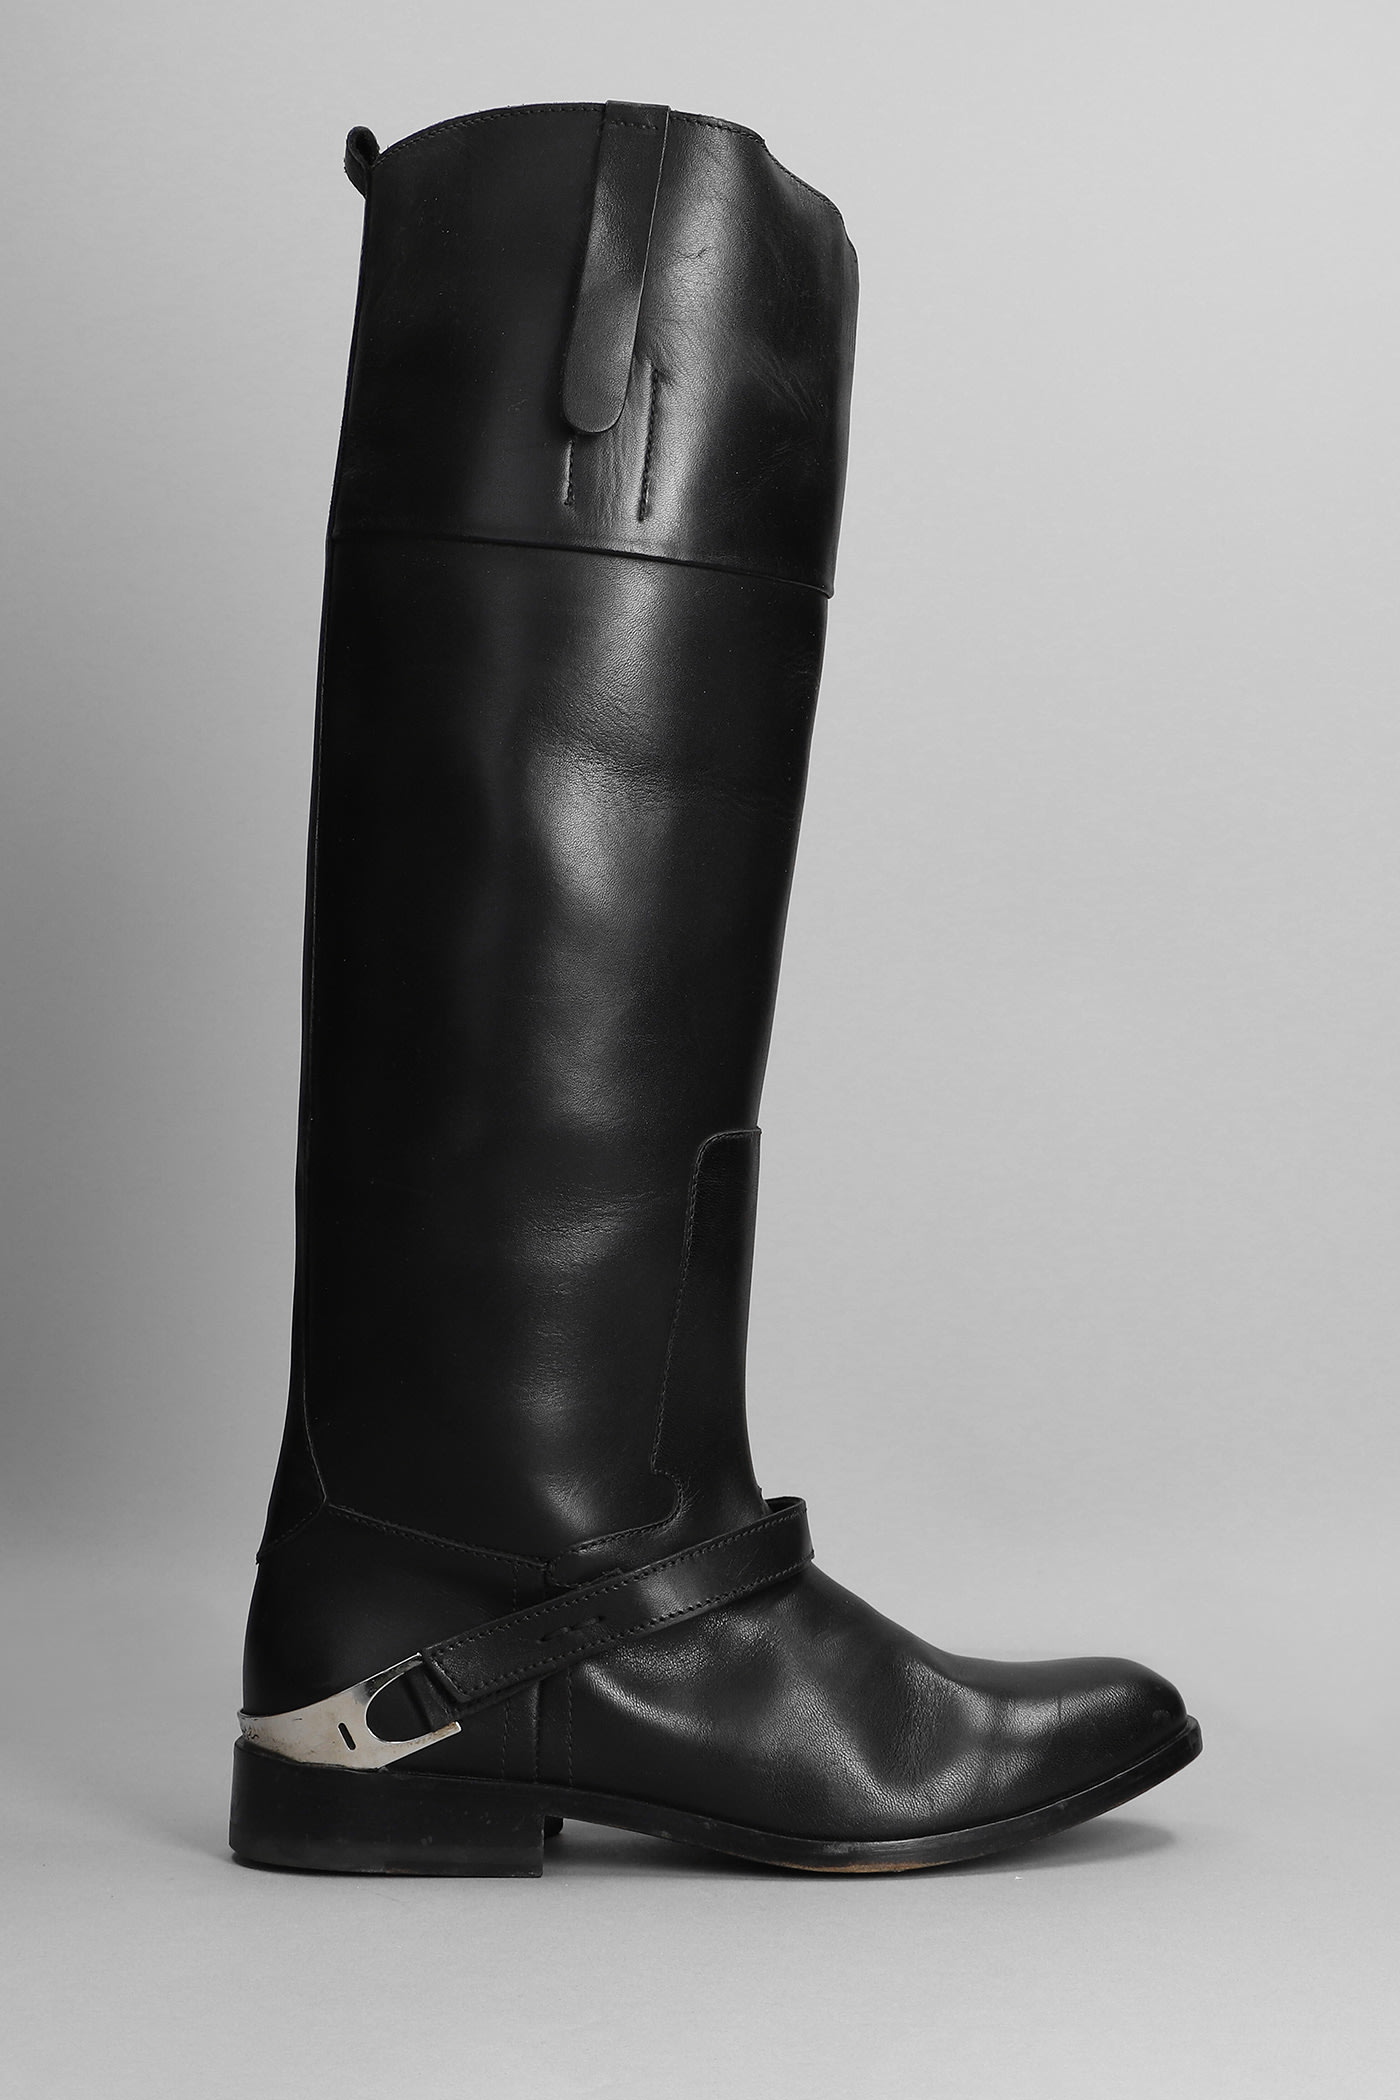 Golden Goose Charlie Low Heels Boots In Black Leather